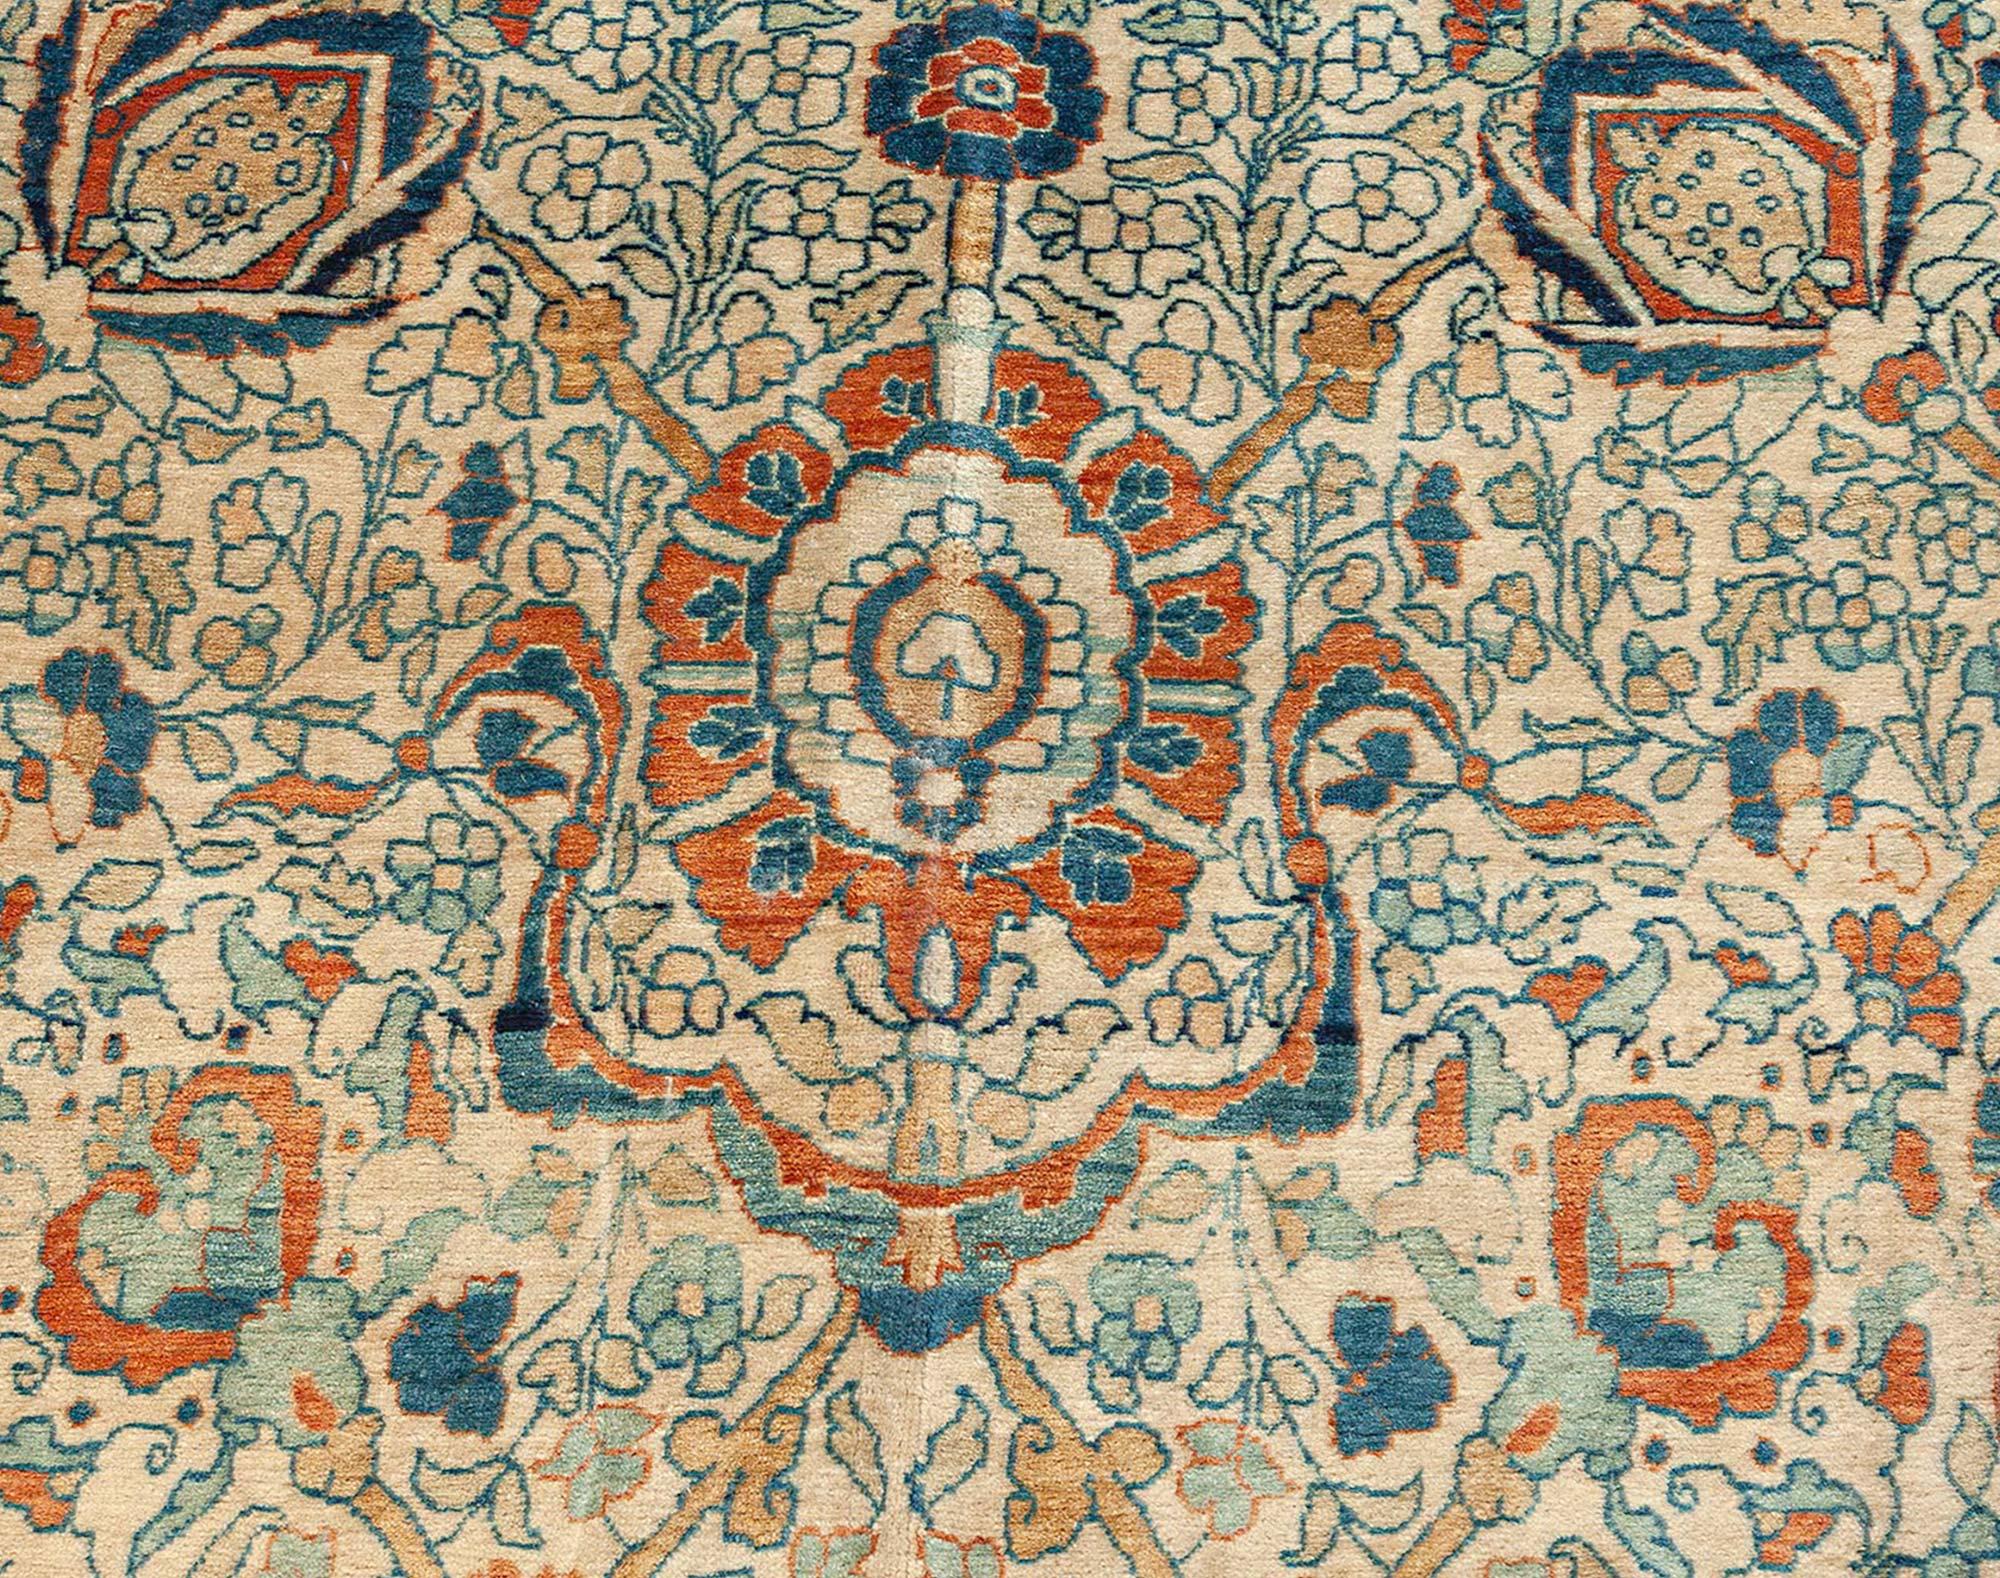 Authentic 19th century Persian Tabriz handmade wool rug
Size: 10'3